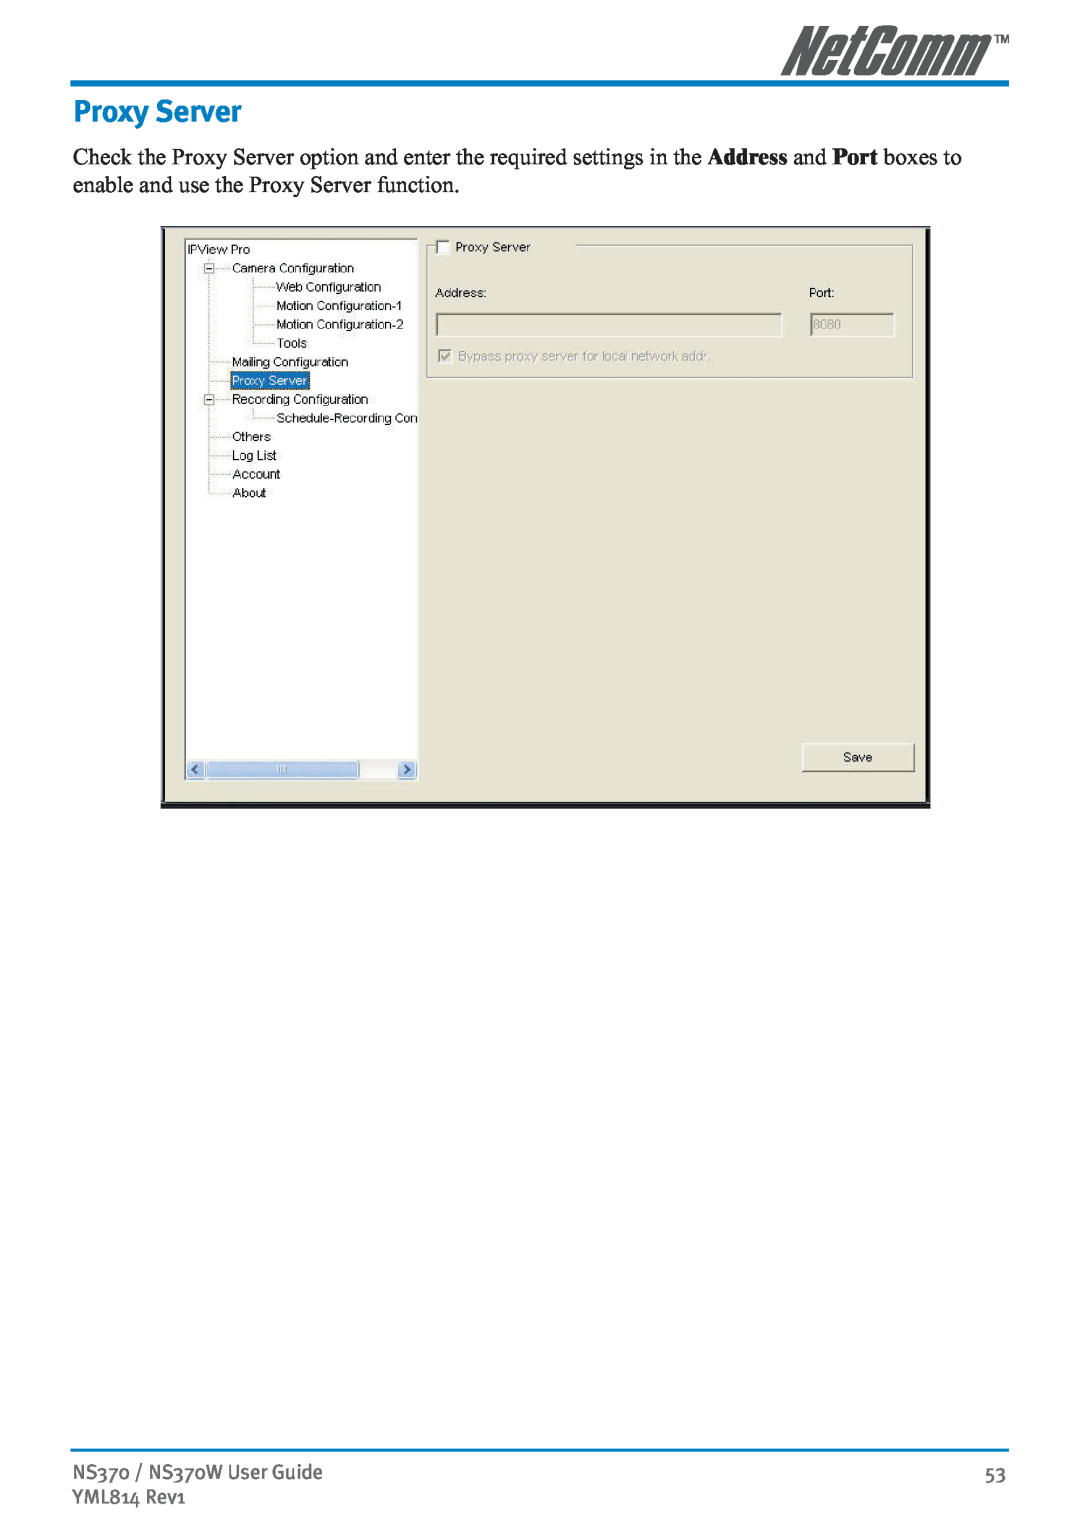 NetComm manual Proxy Server, NS370 / NS370W User Guide, YML814 Rev1 